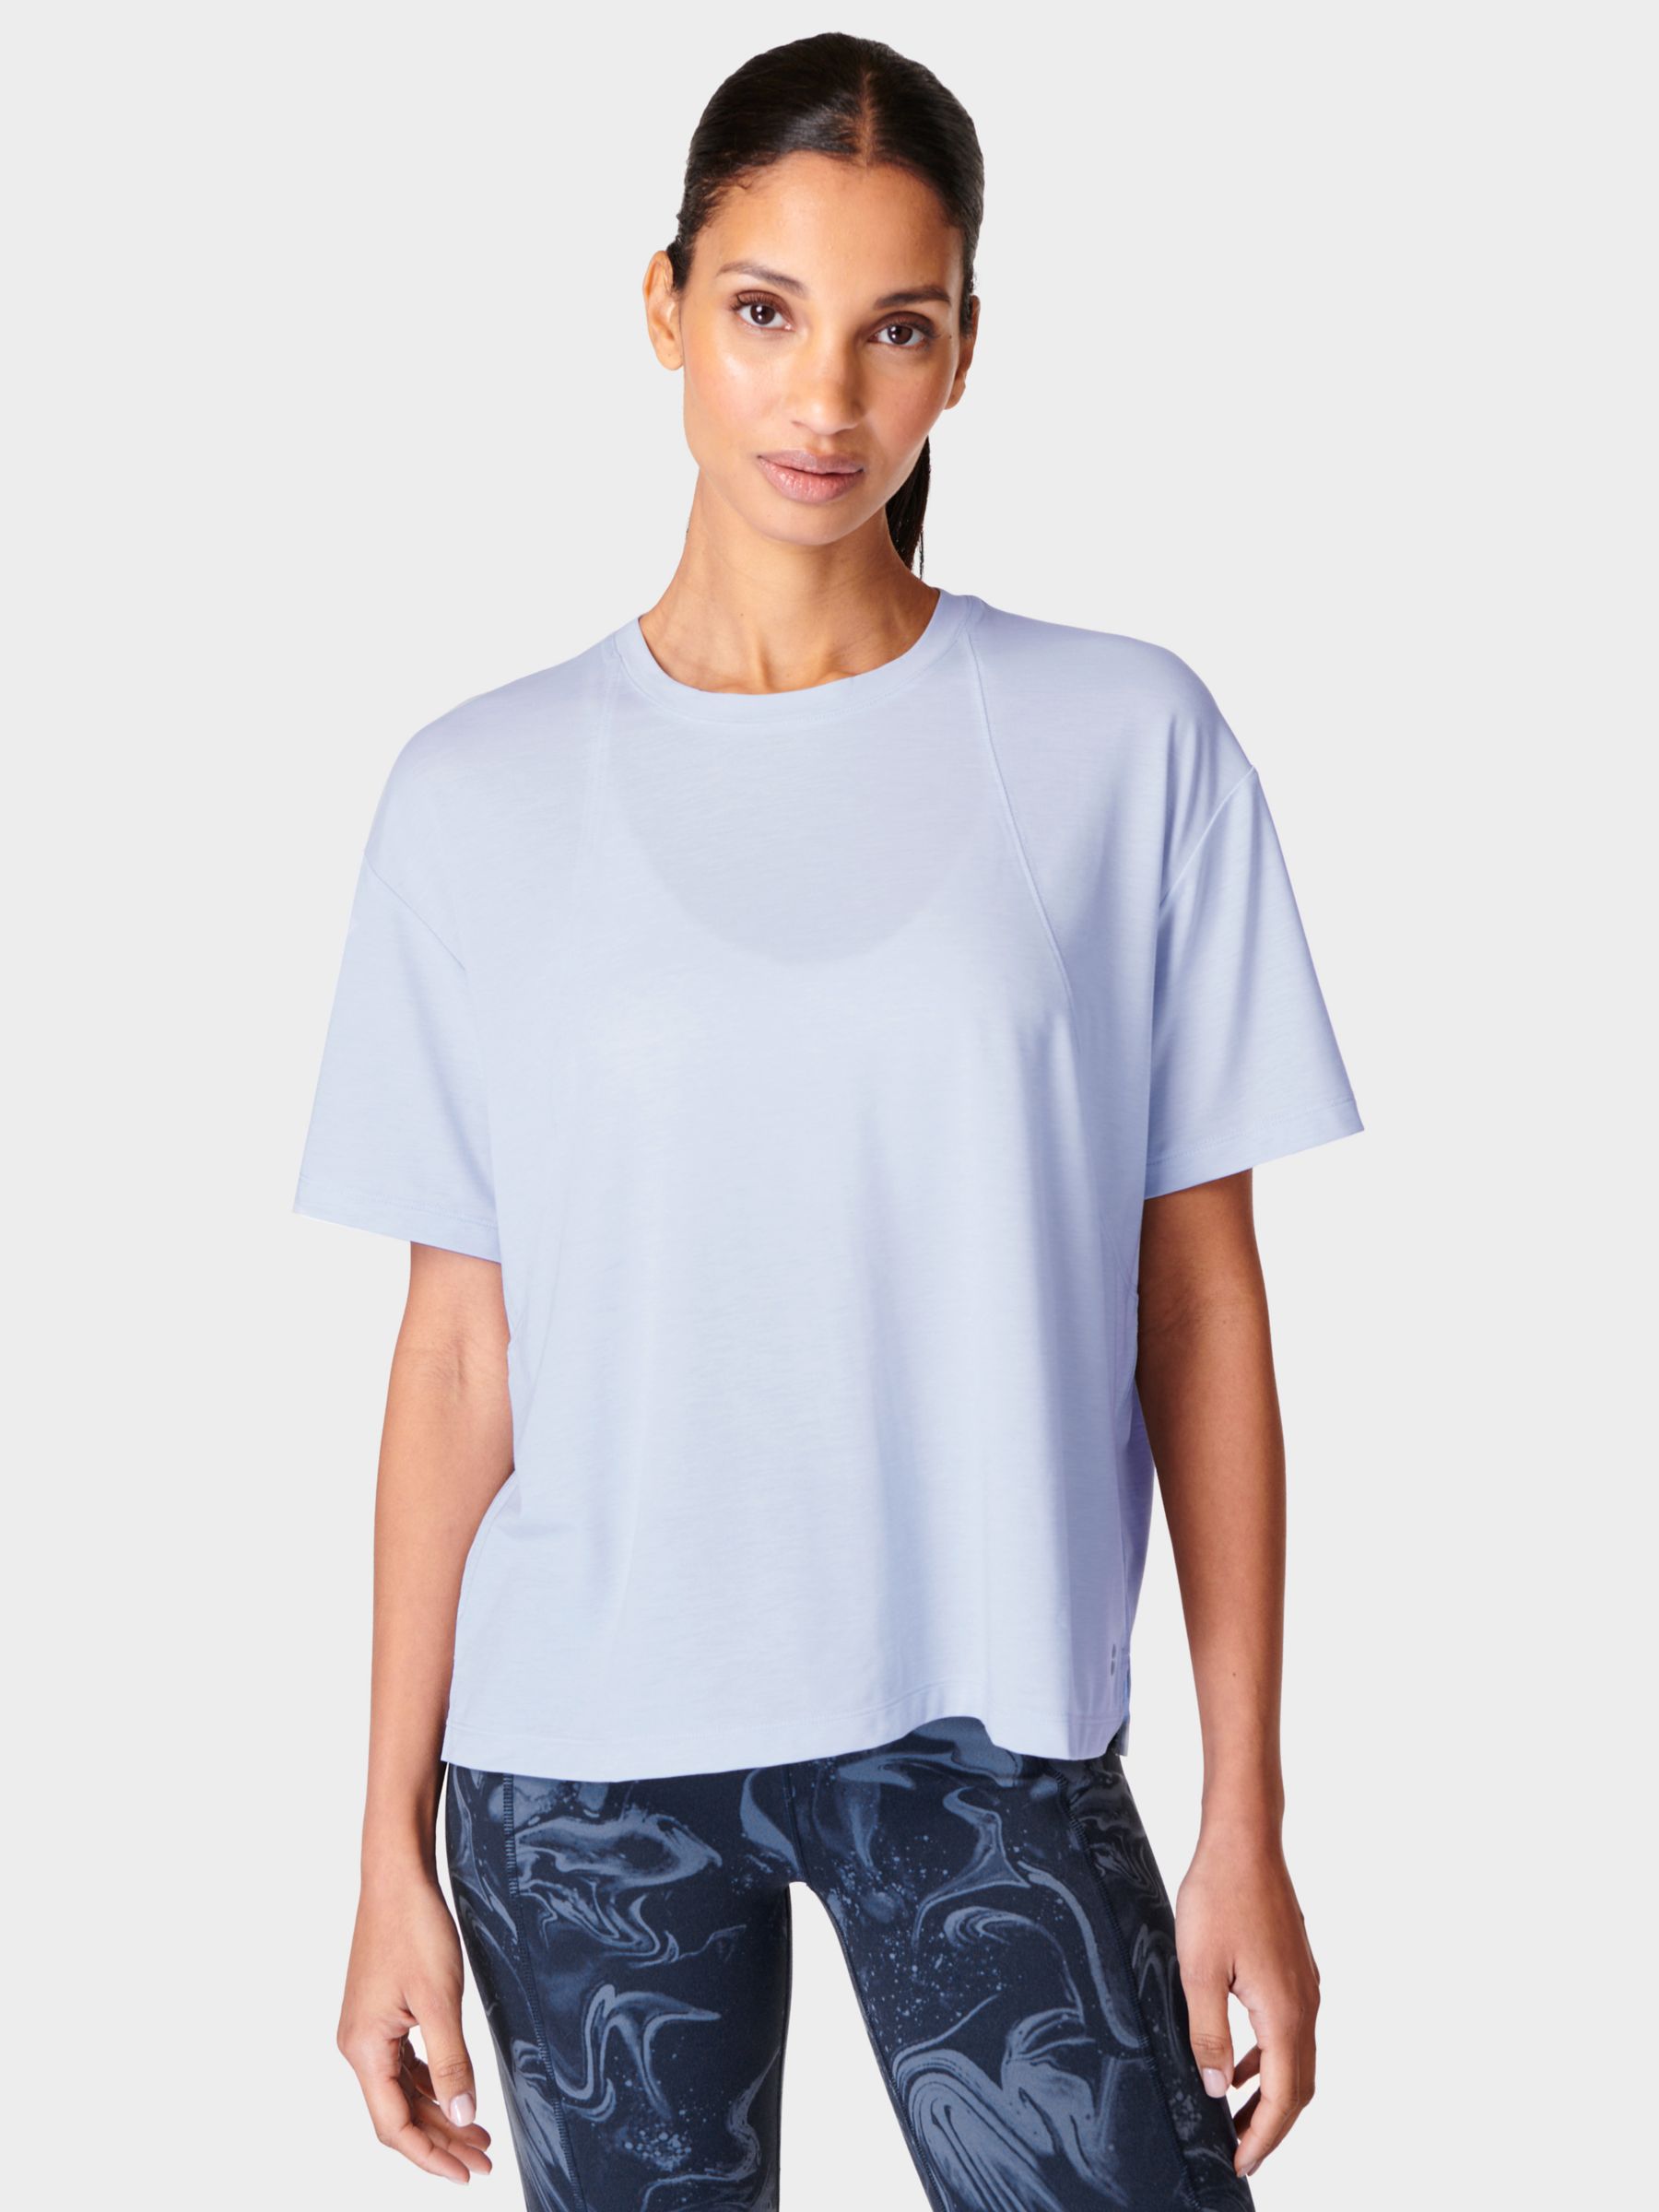 Sweaty Betty Soft Flow Studio T-Shirt, Salt Blue, S